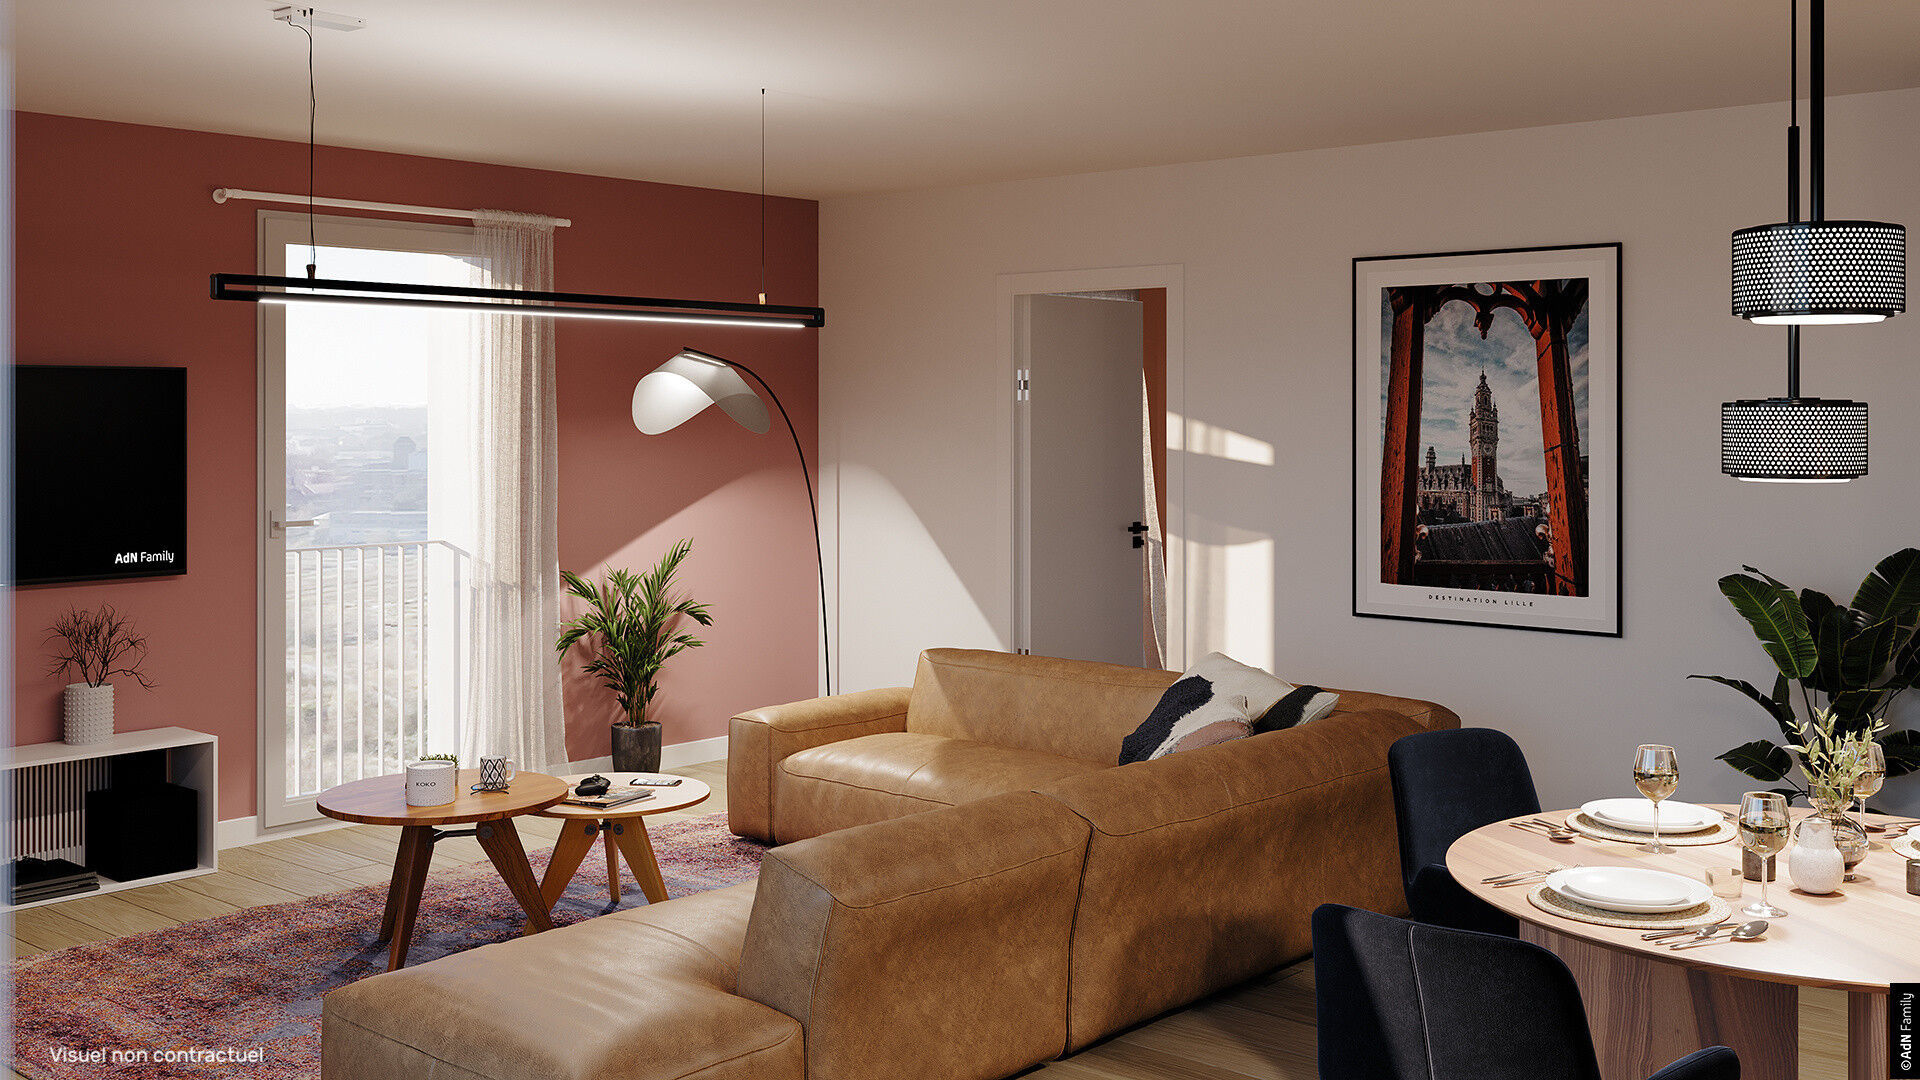 Blanc-Mesnil (Le) Appartement neuf 2 pièces 41 m²